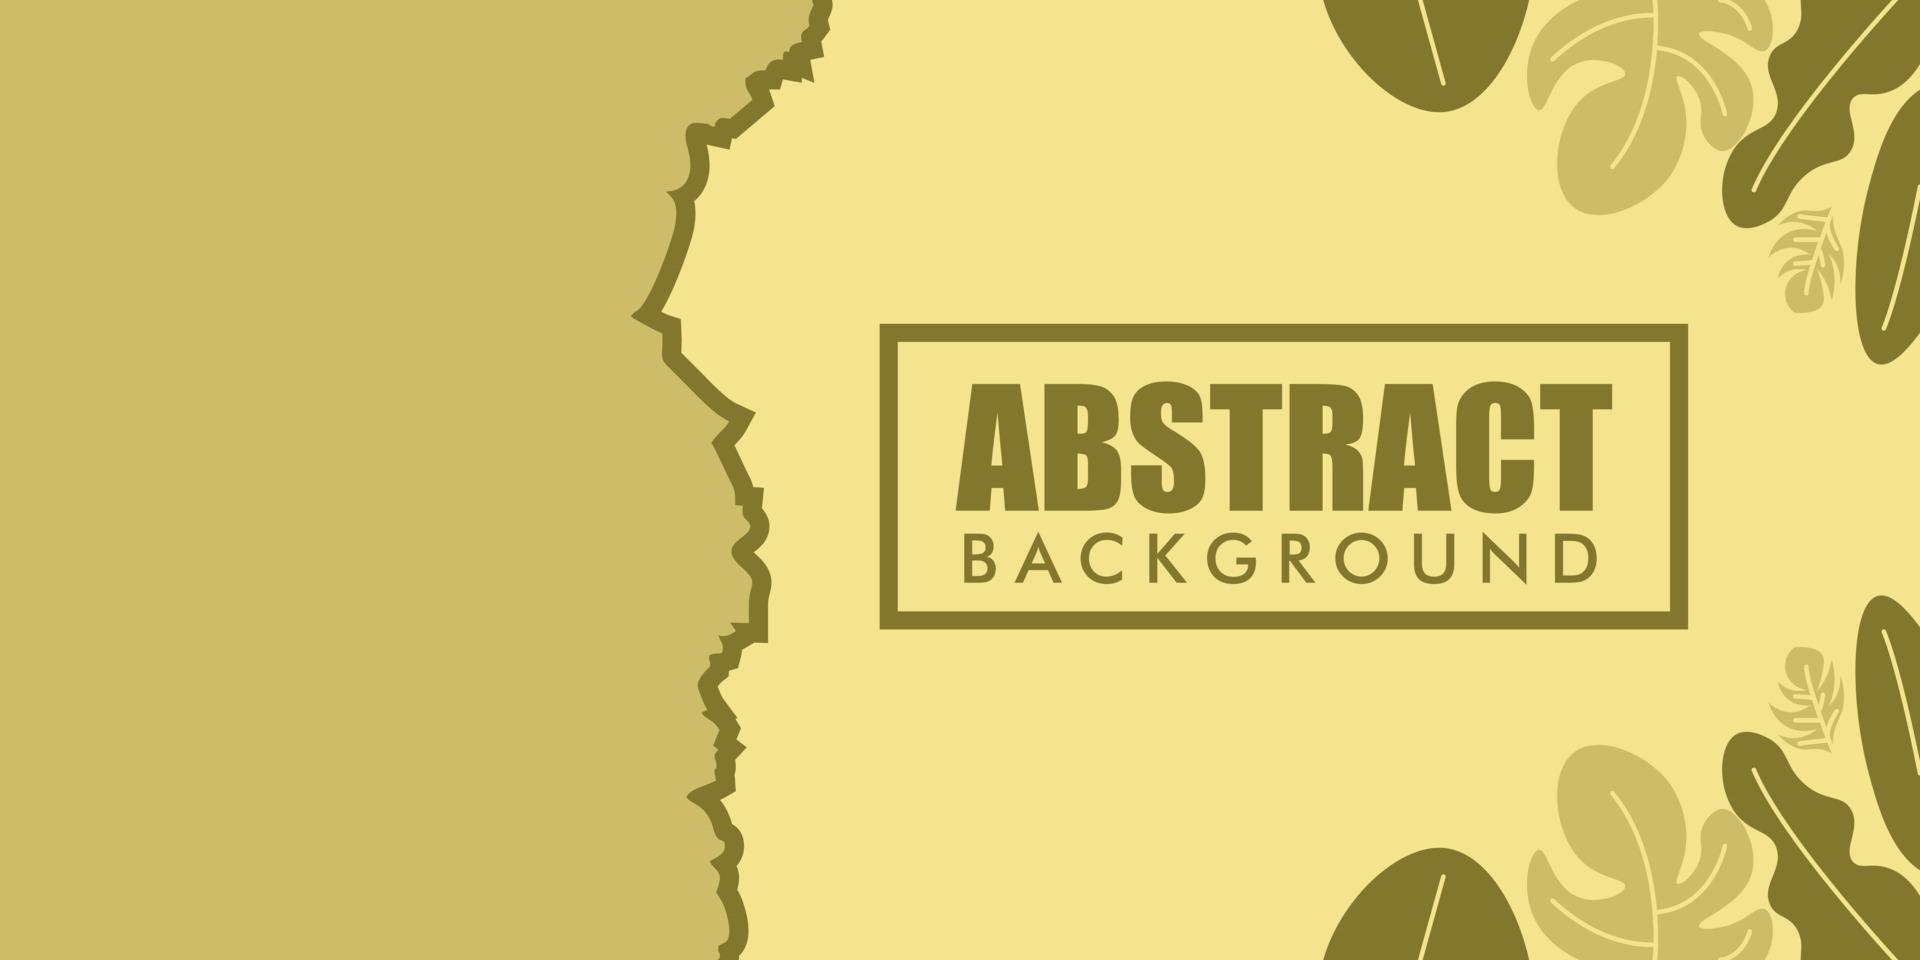 vector illustration of abstract broadband background